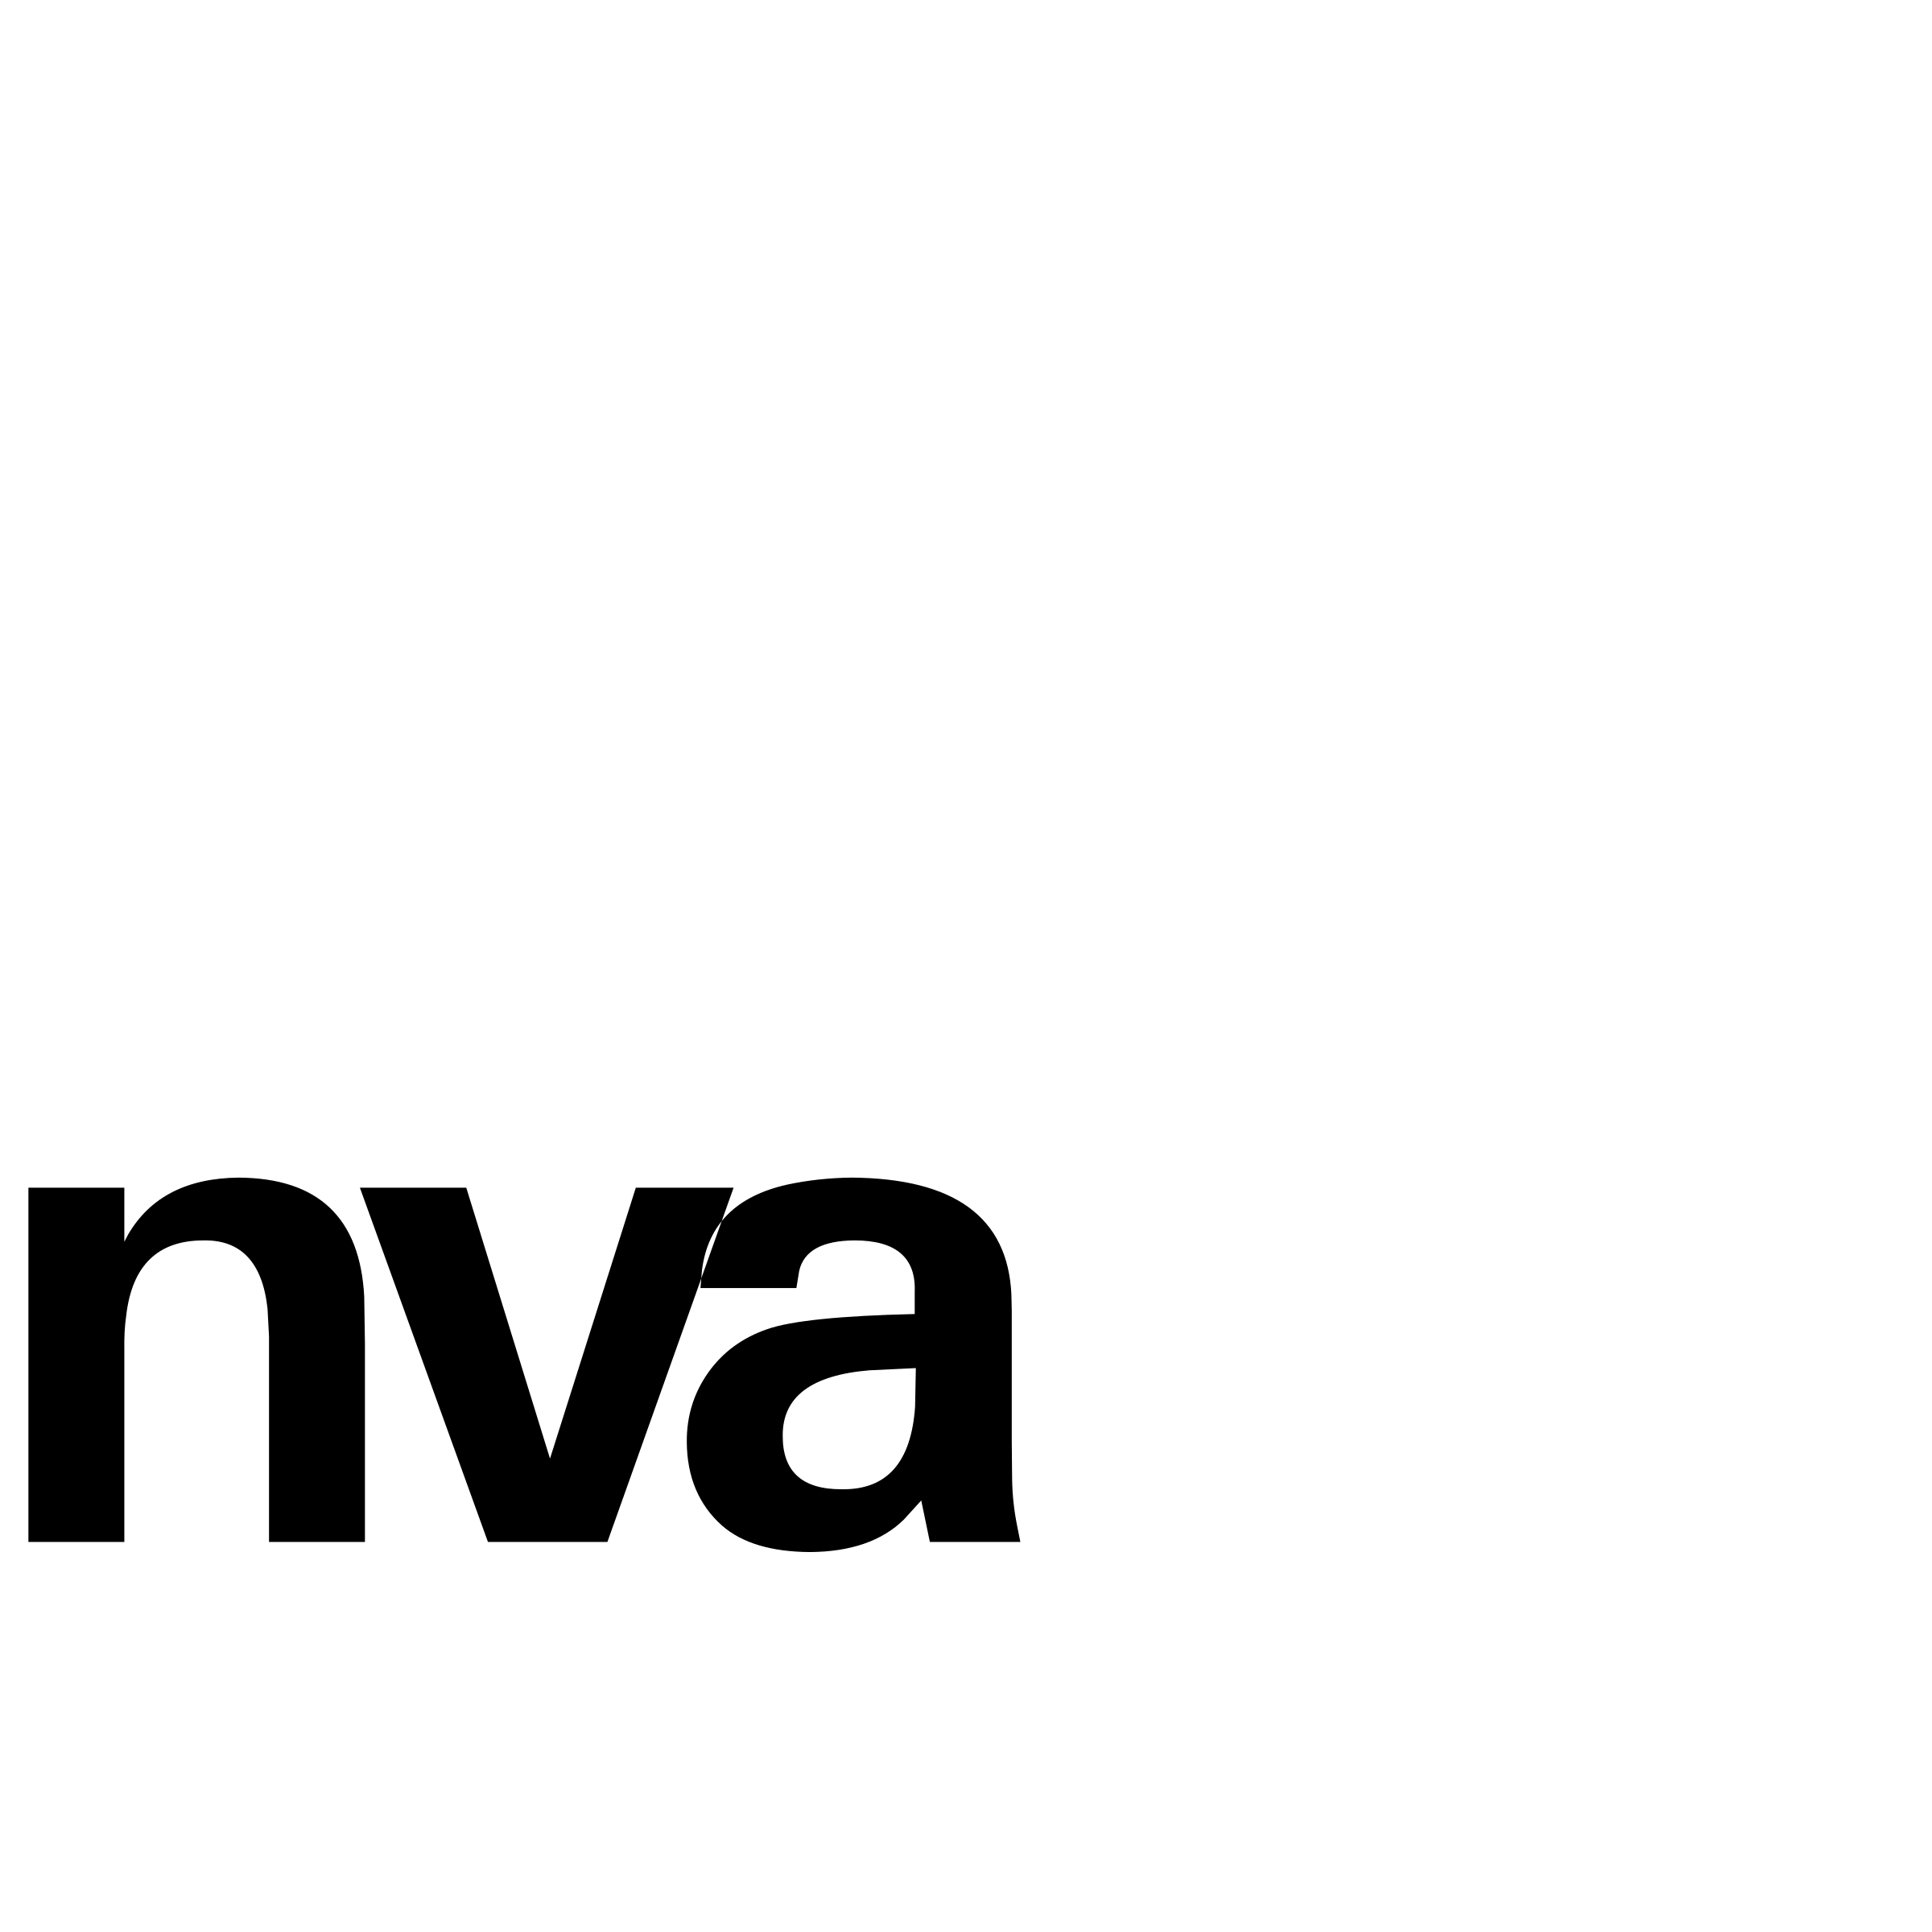 NVA Logo - NVA Logo PNG Transparent & SVG Vector - Freebie Supply